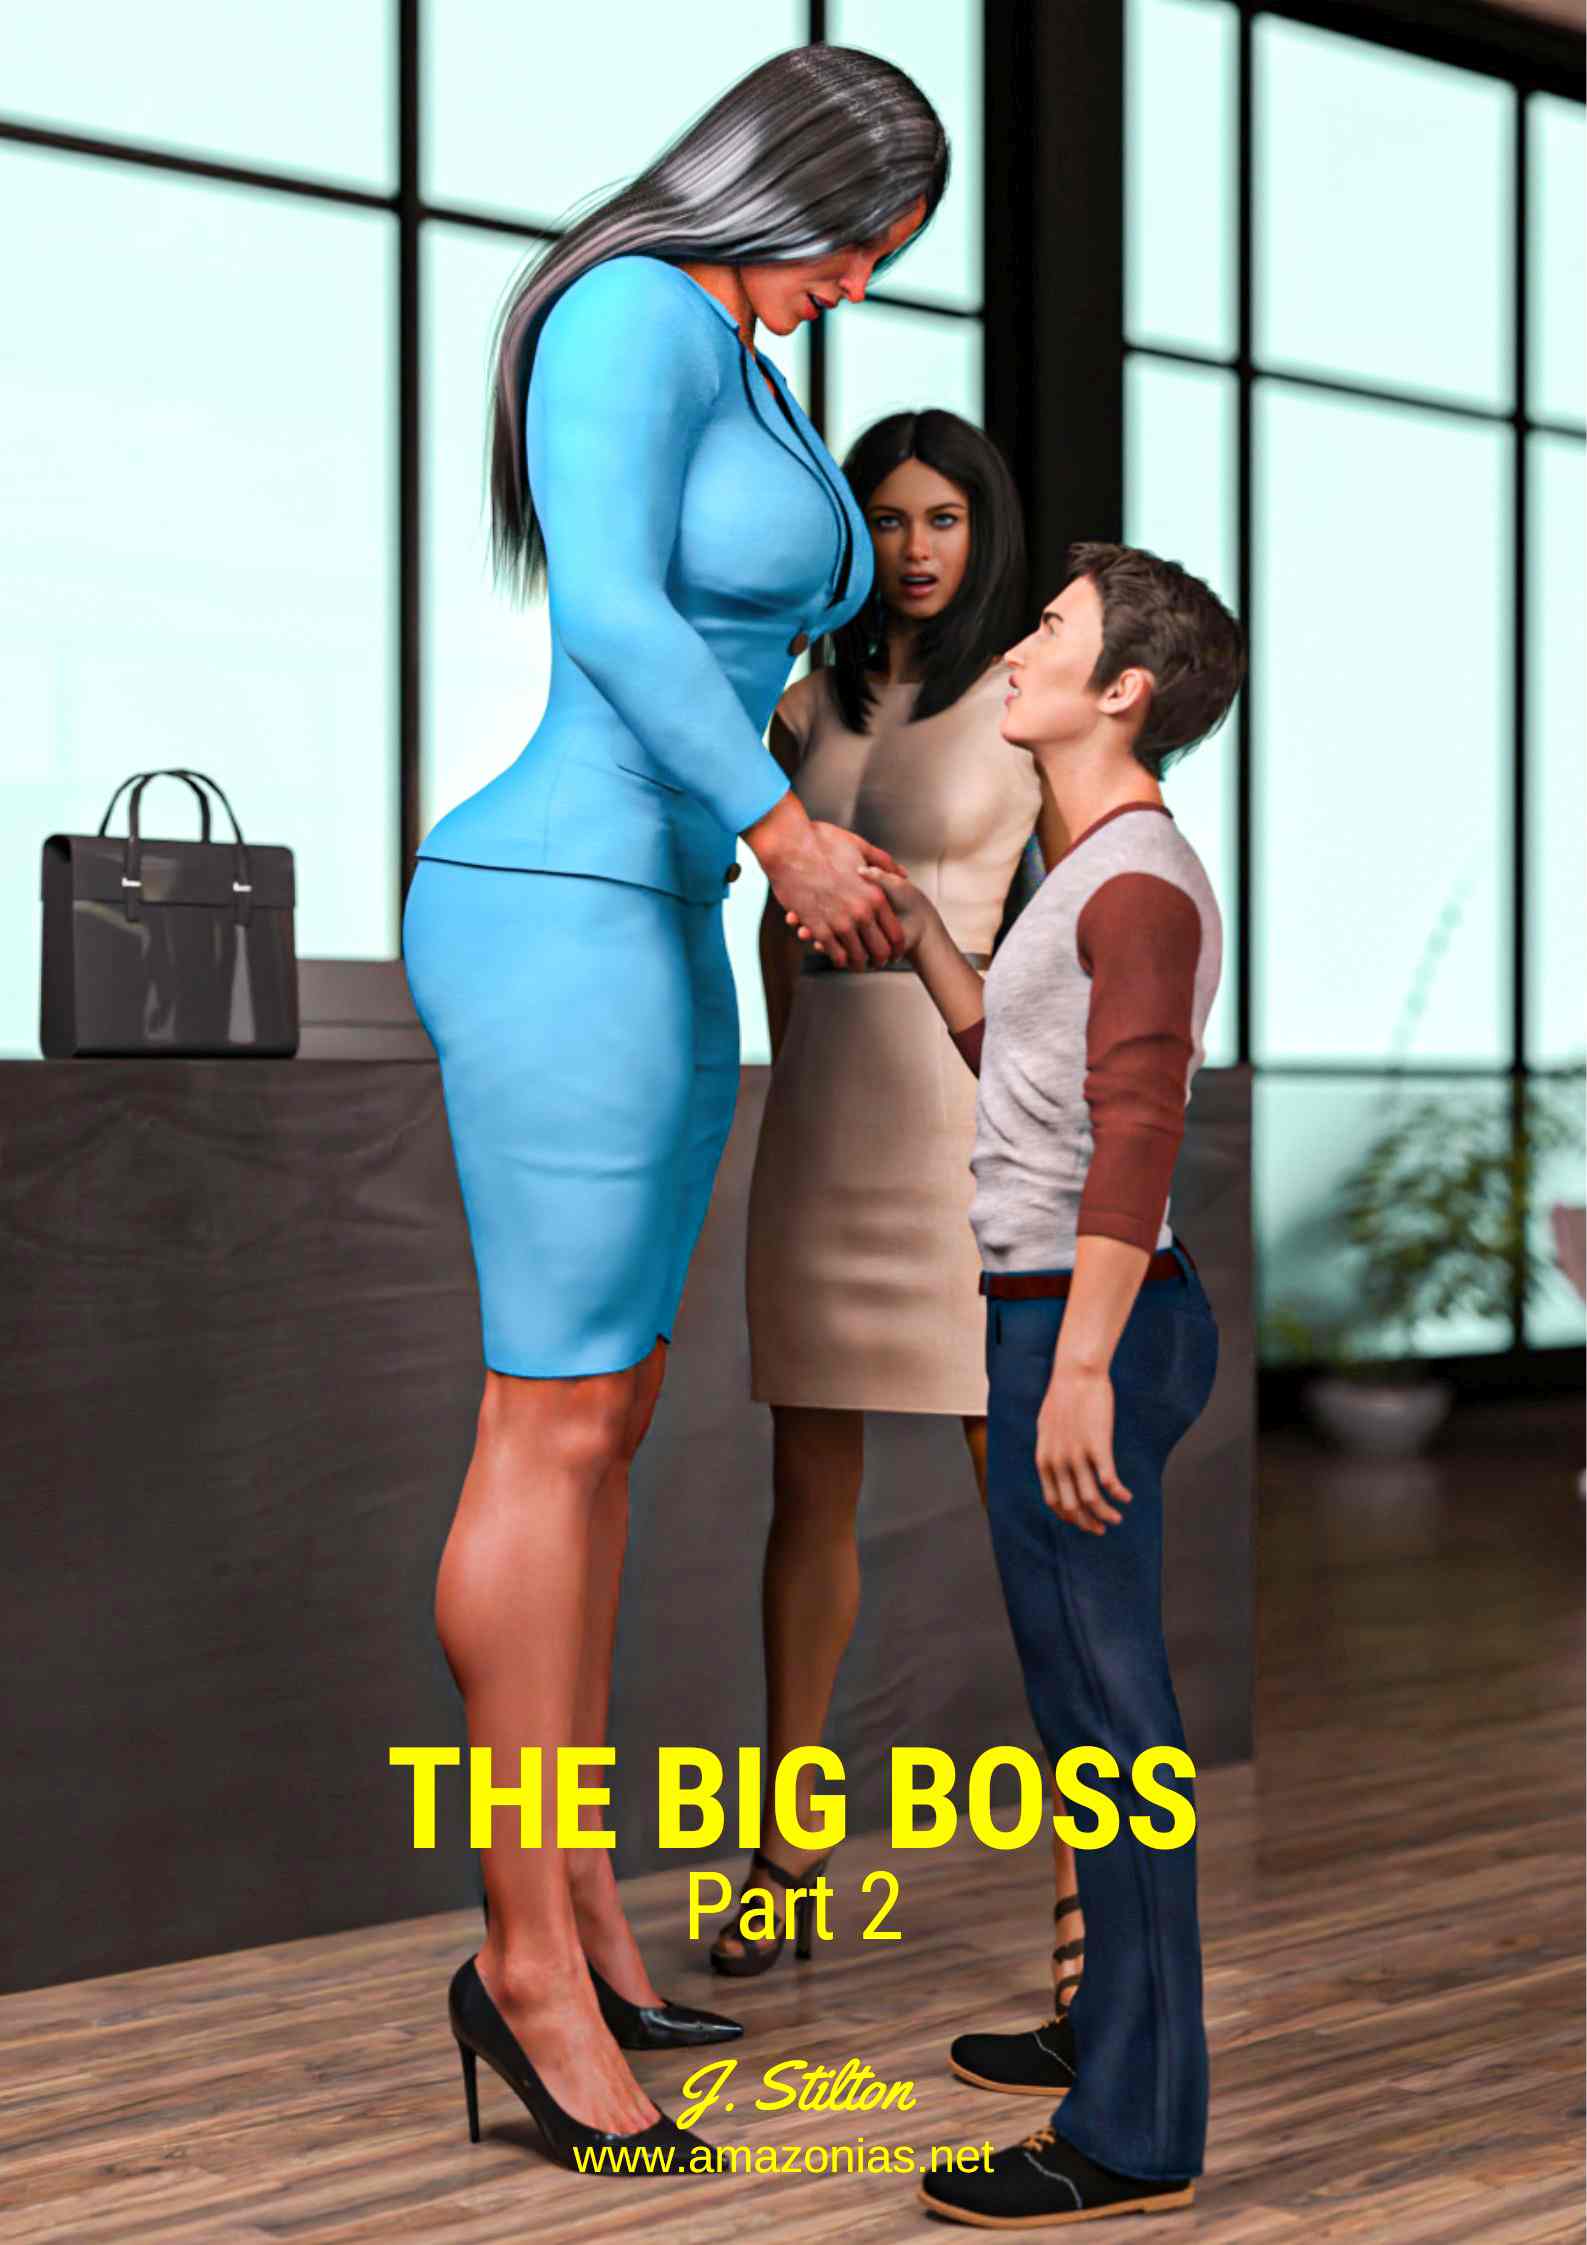 The big boss - part 2